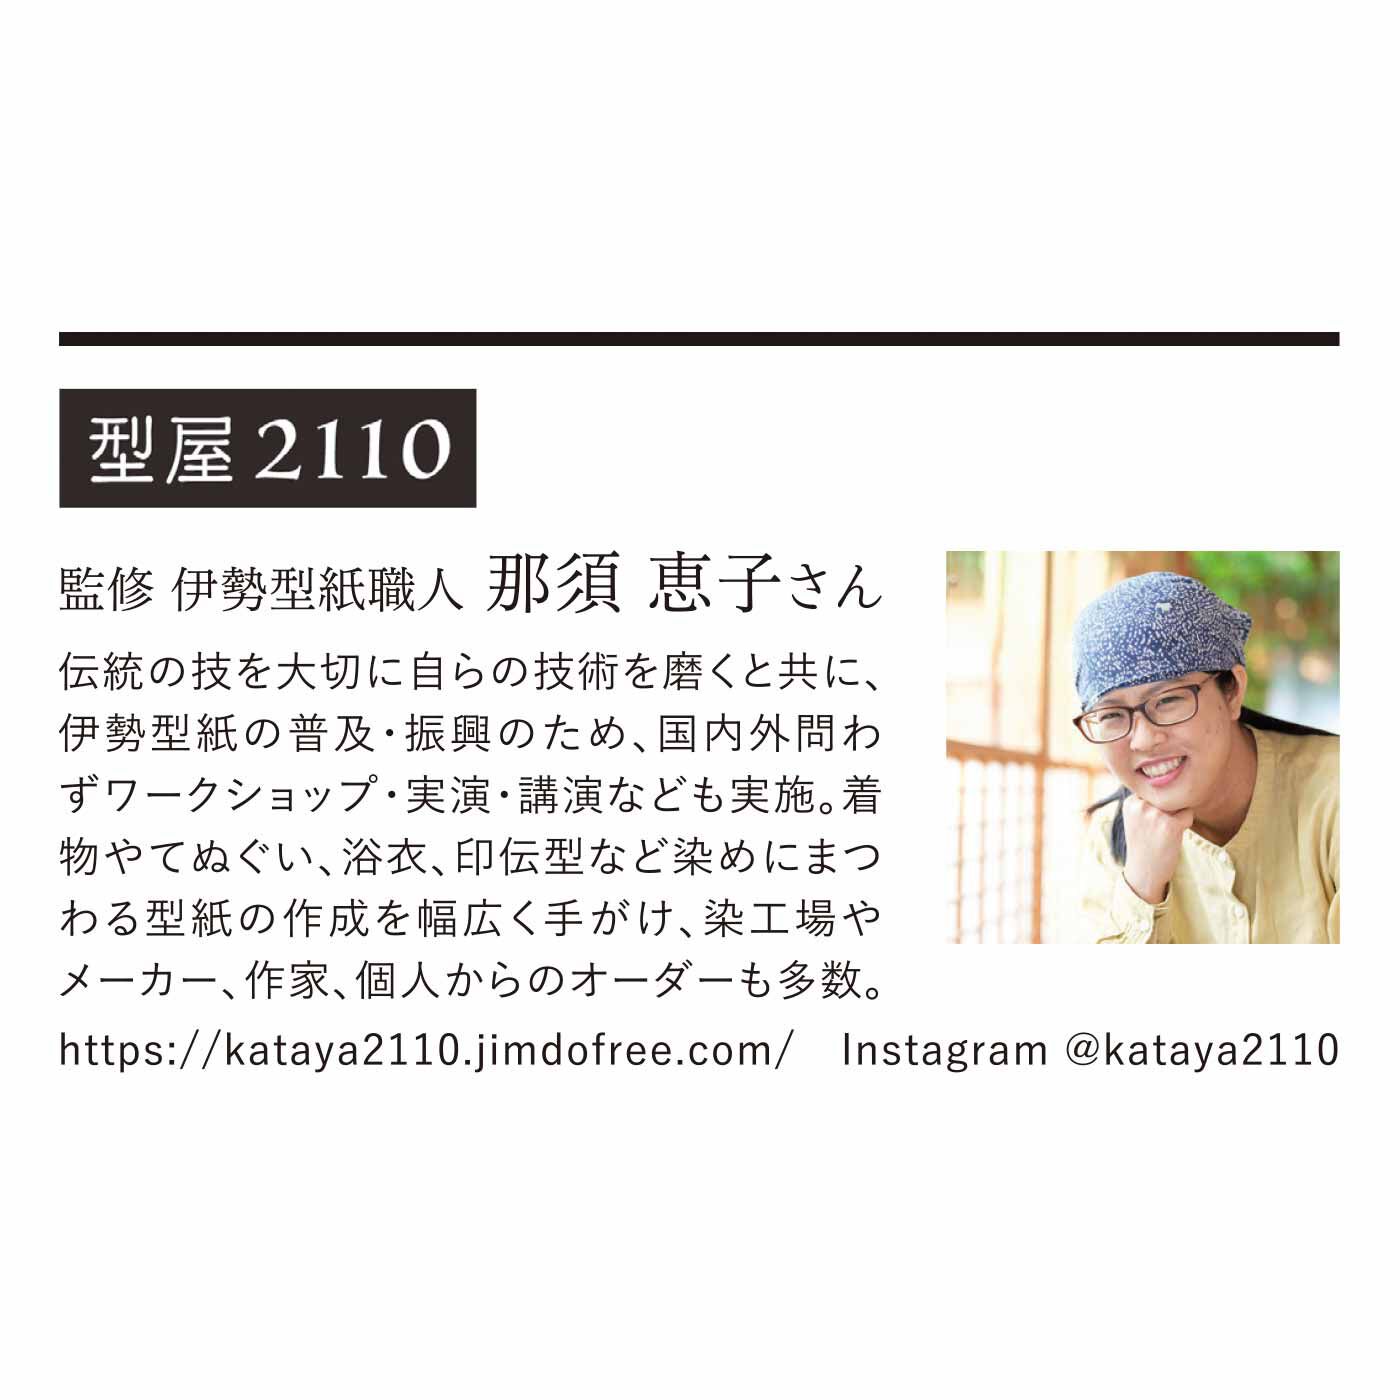 SeeMONO|【7月分以降お届け】kataya2110さん監修 日本の伝統にふれる 伊勢型紙キットの会